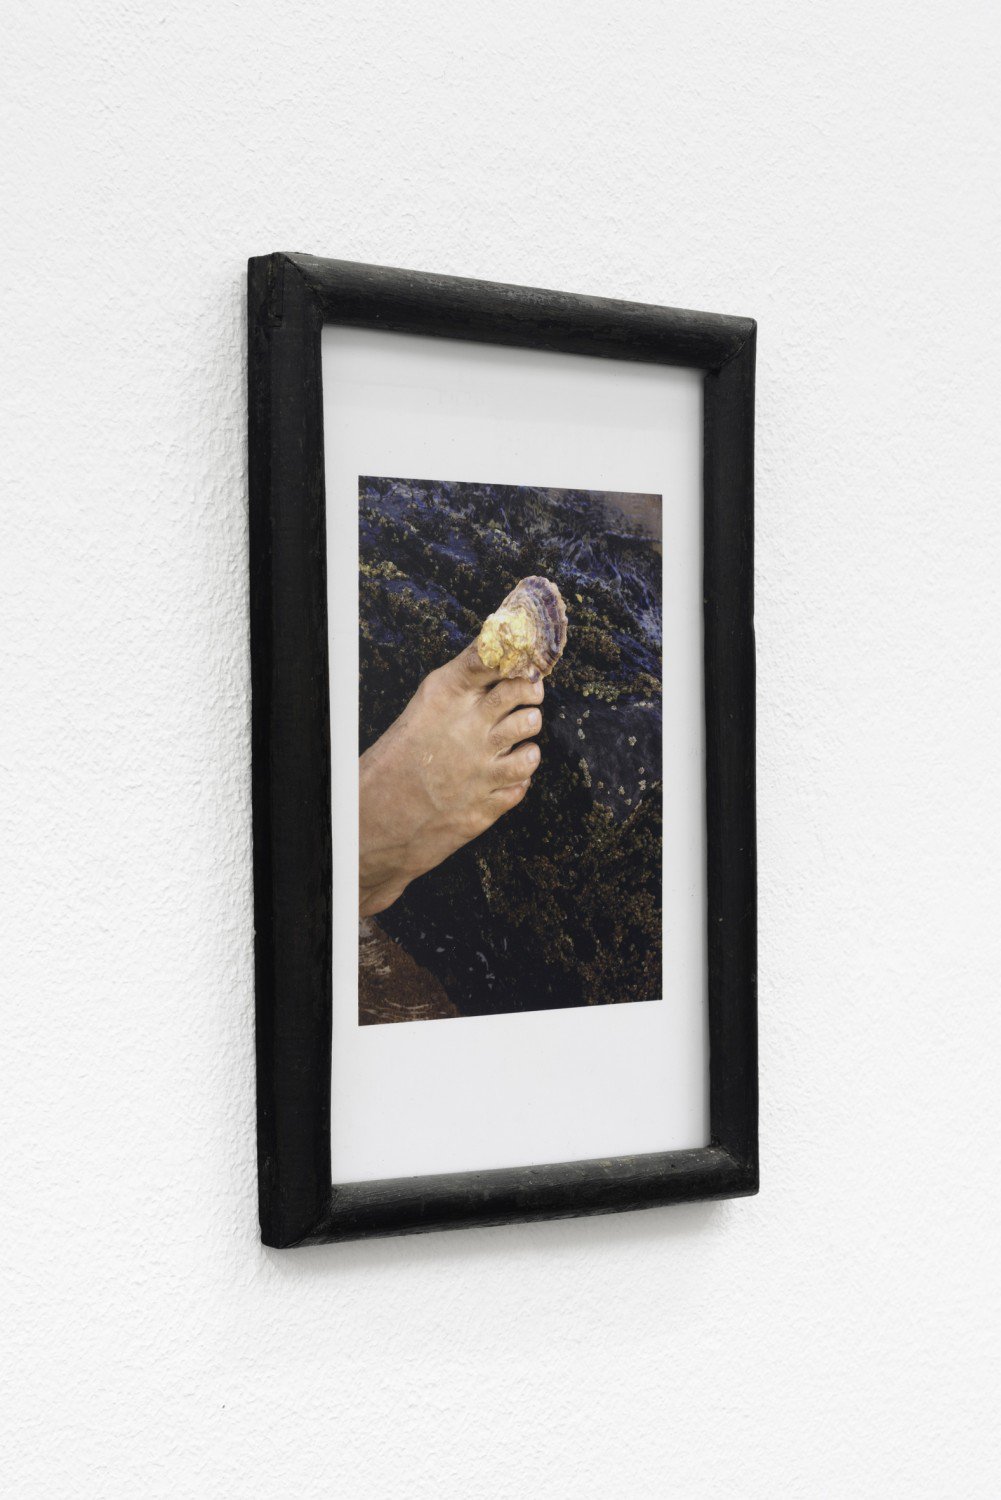 Franz AmannMundaka, 2015Photograph, found frame24.5 x 16.5 cm